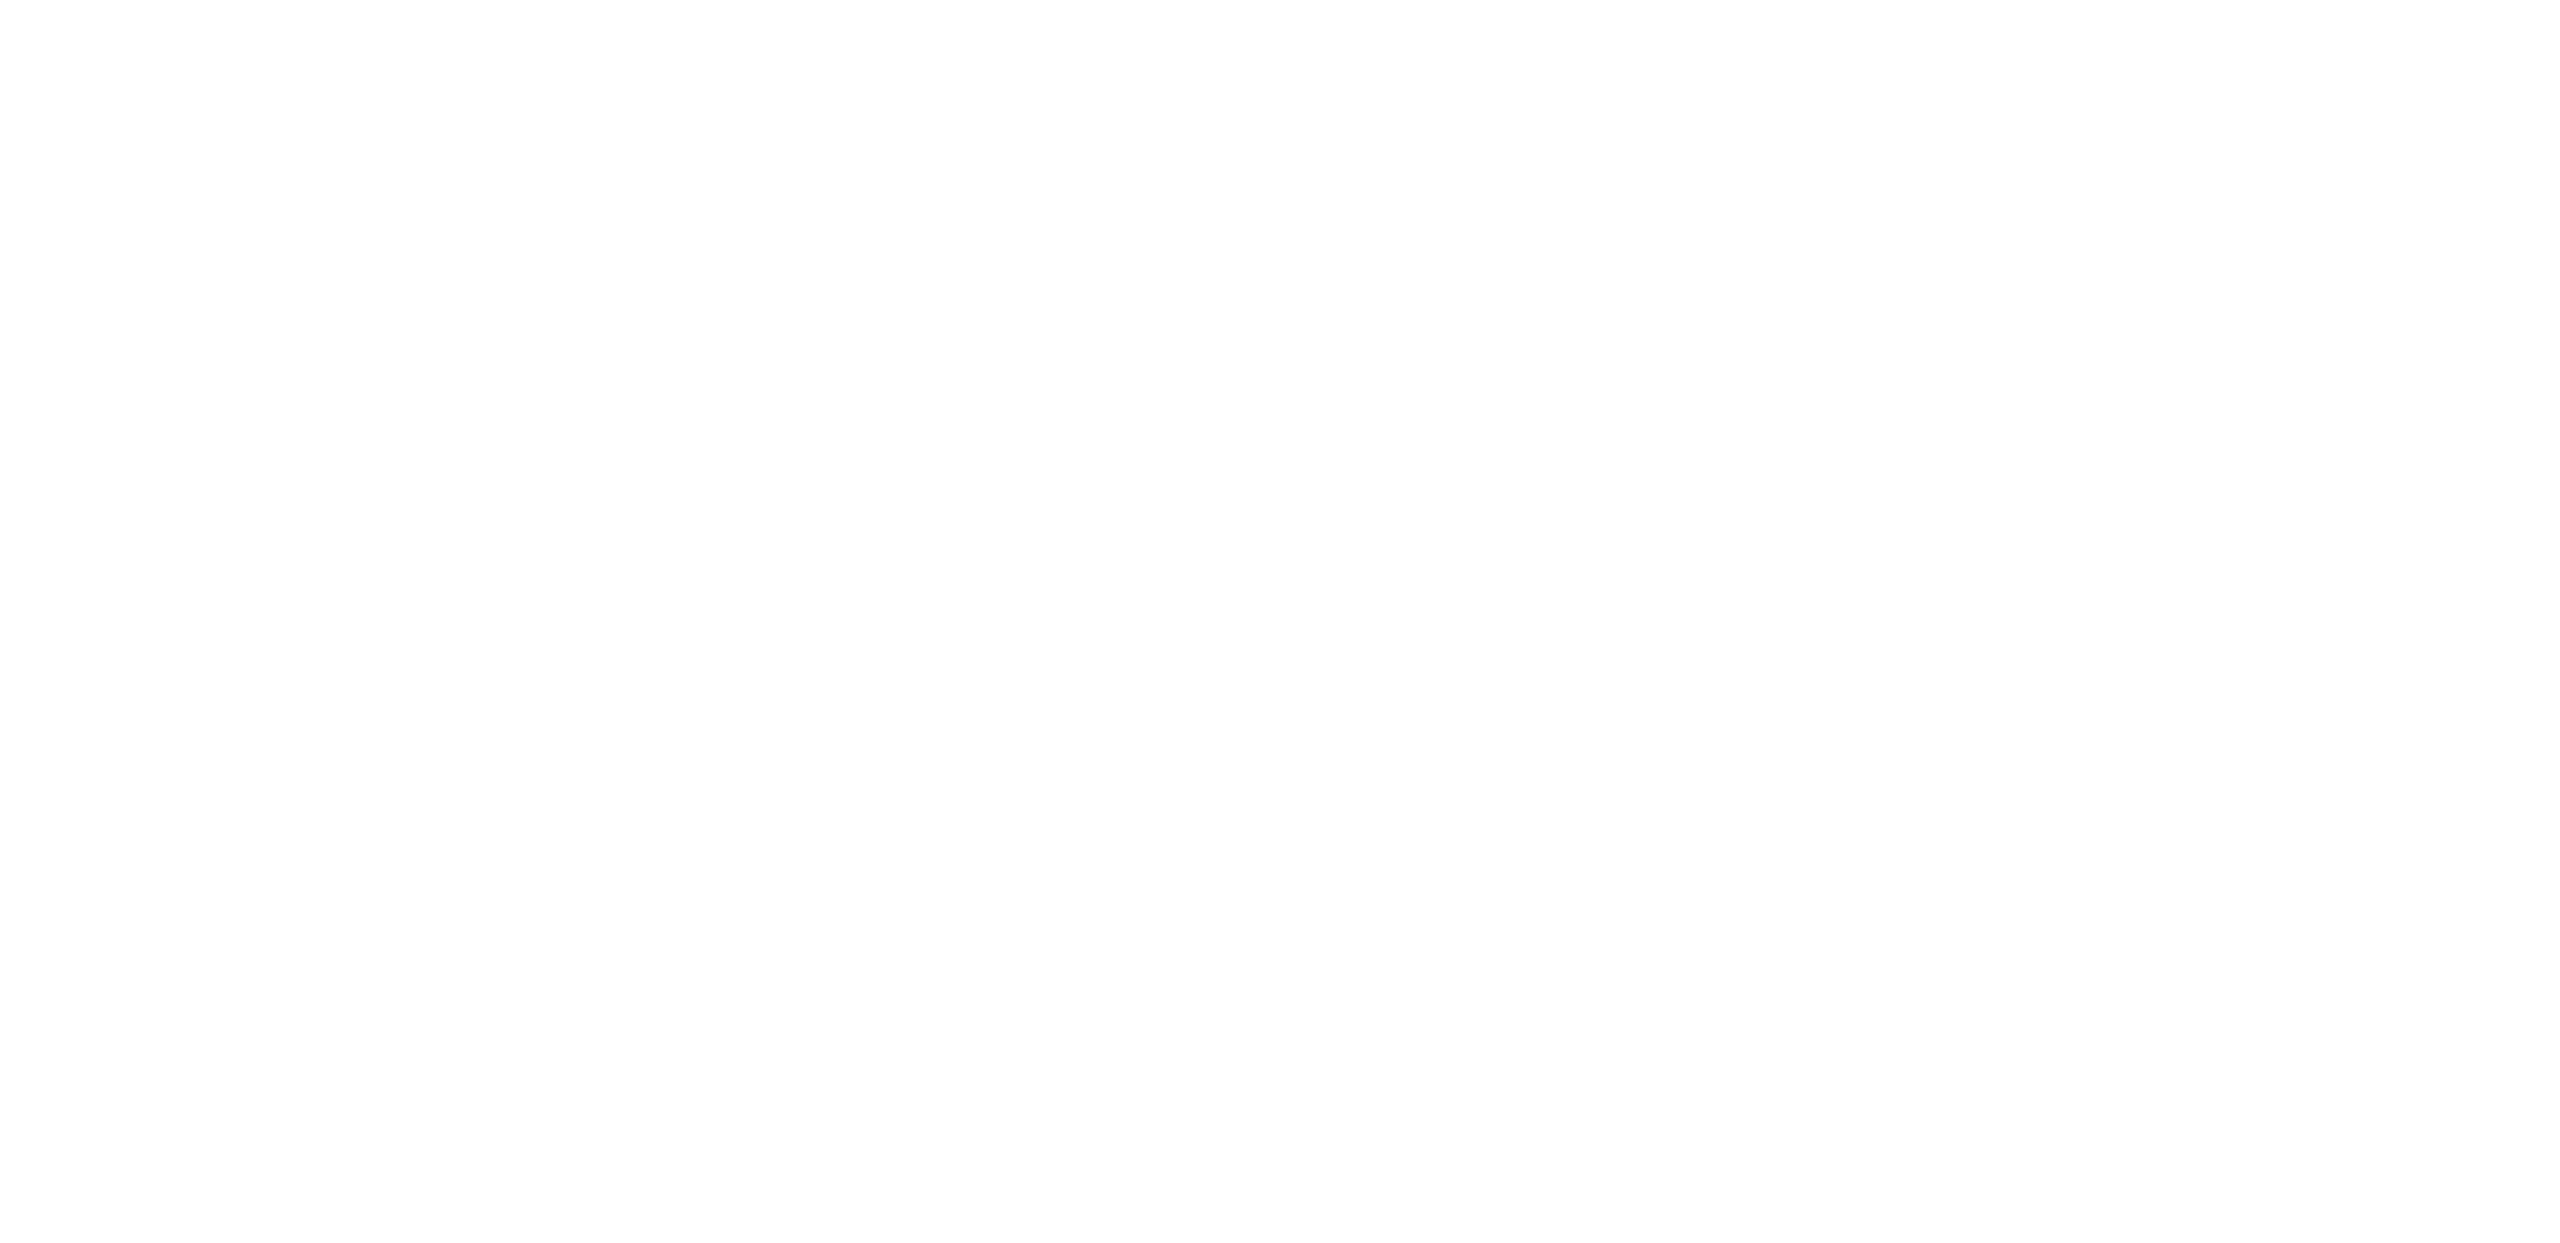 Northern Exteriors